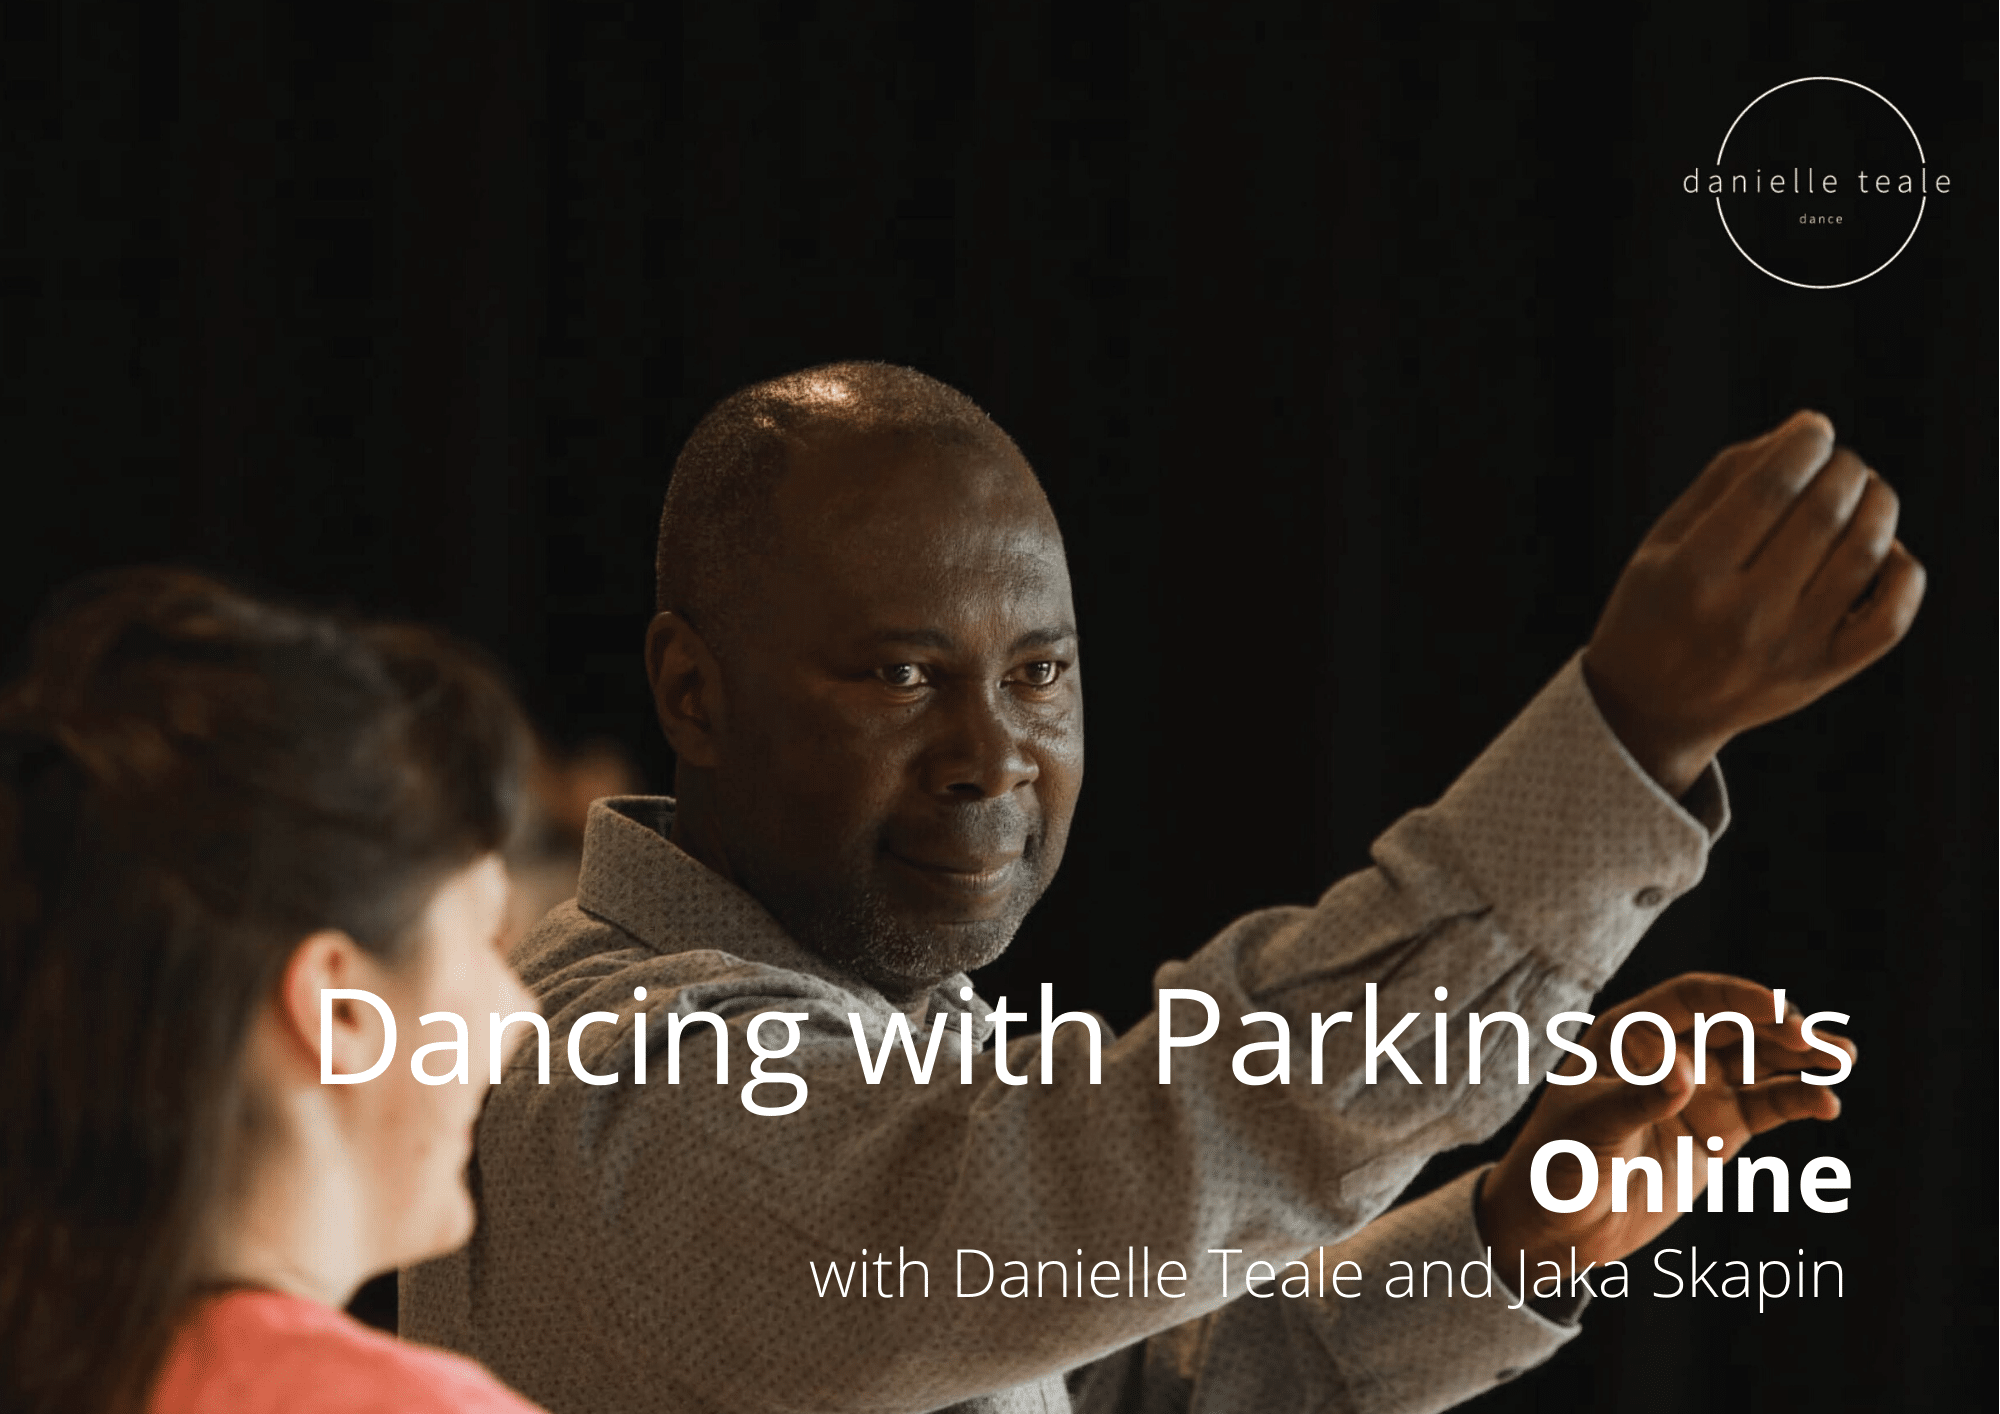 dancing with Parkinson's online, poplar union, Danielle teale, Parkinson's, workshop for people with Parkinson's